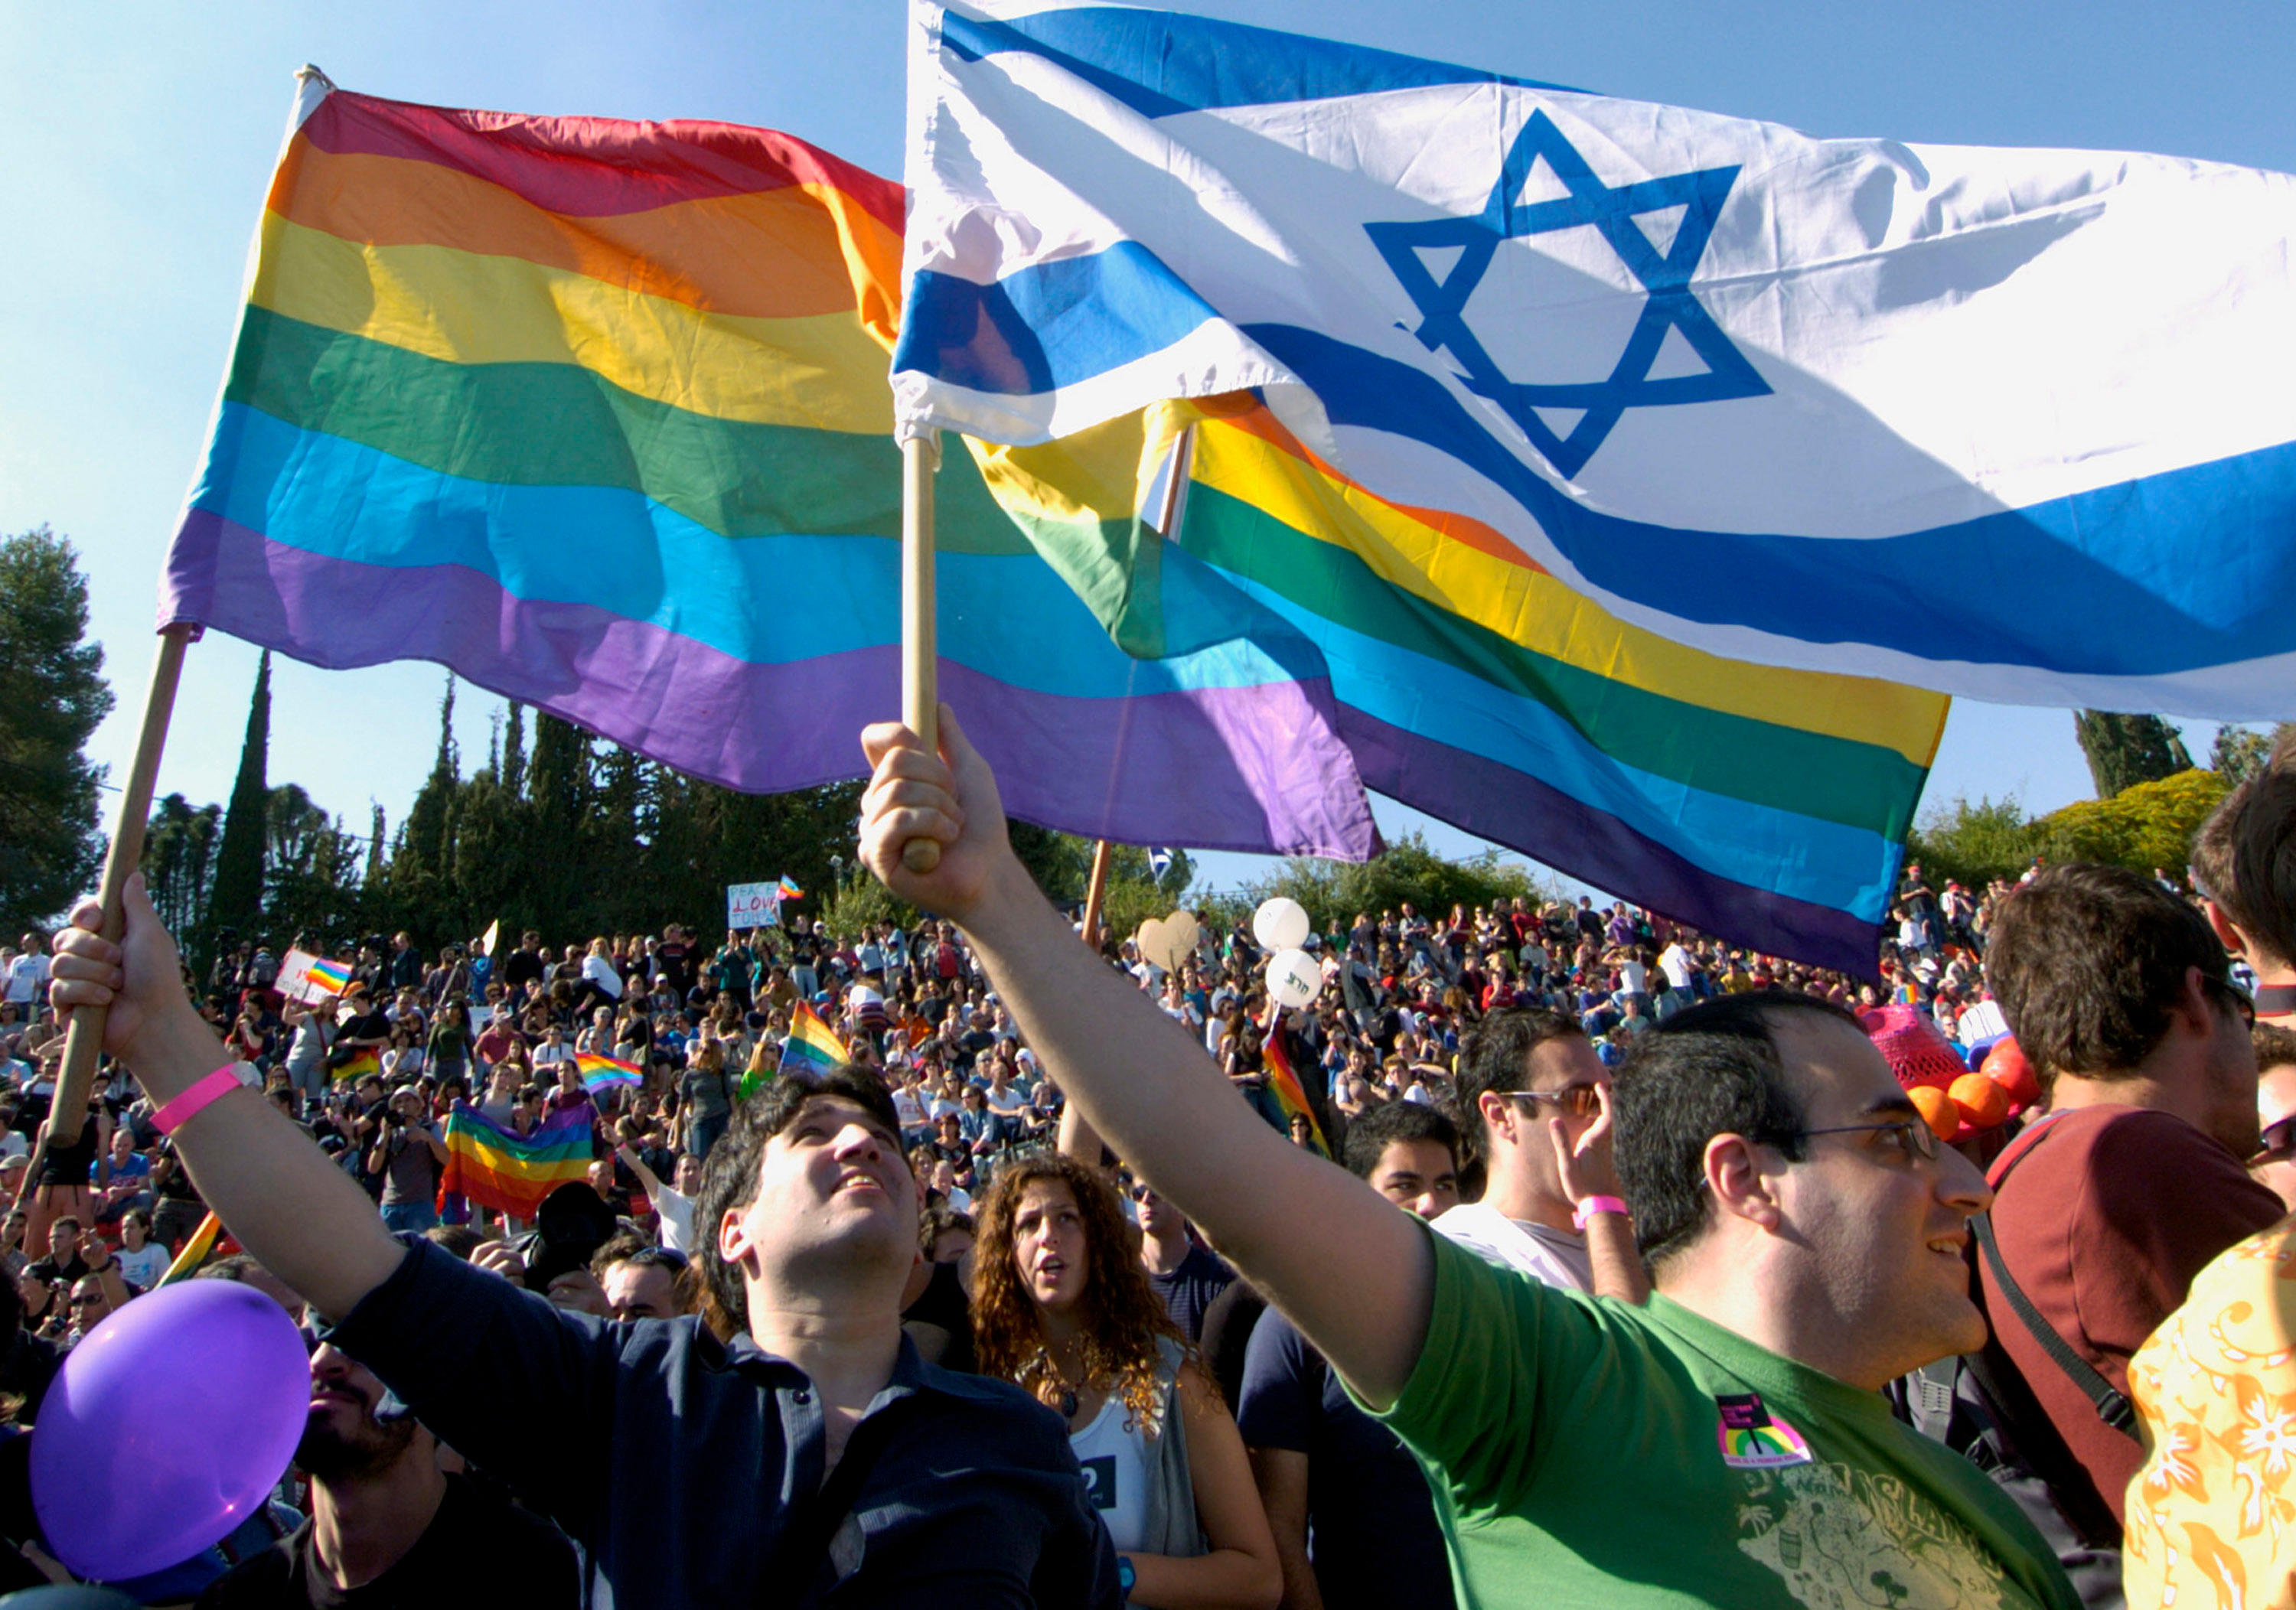 jerusalem skyline with gay pride colors